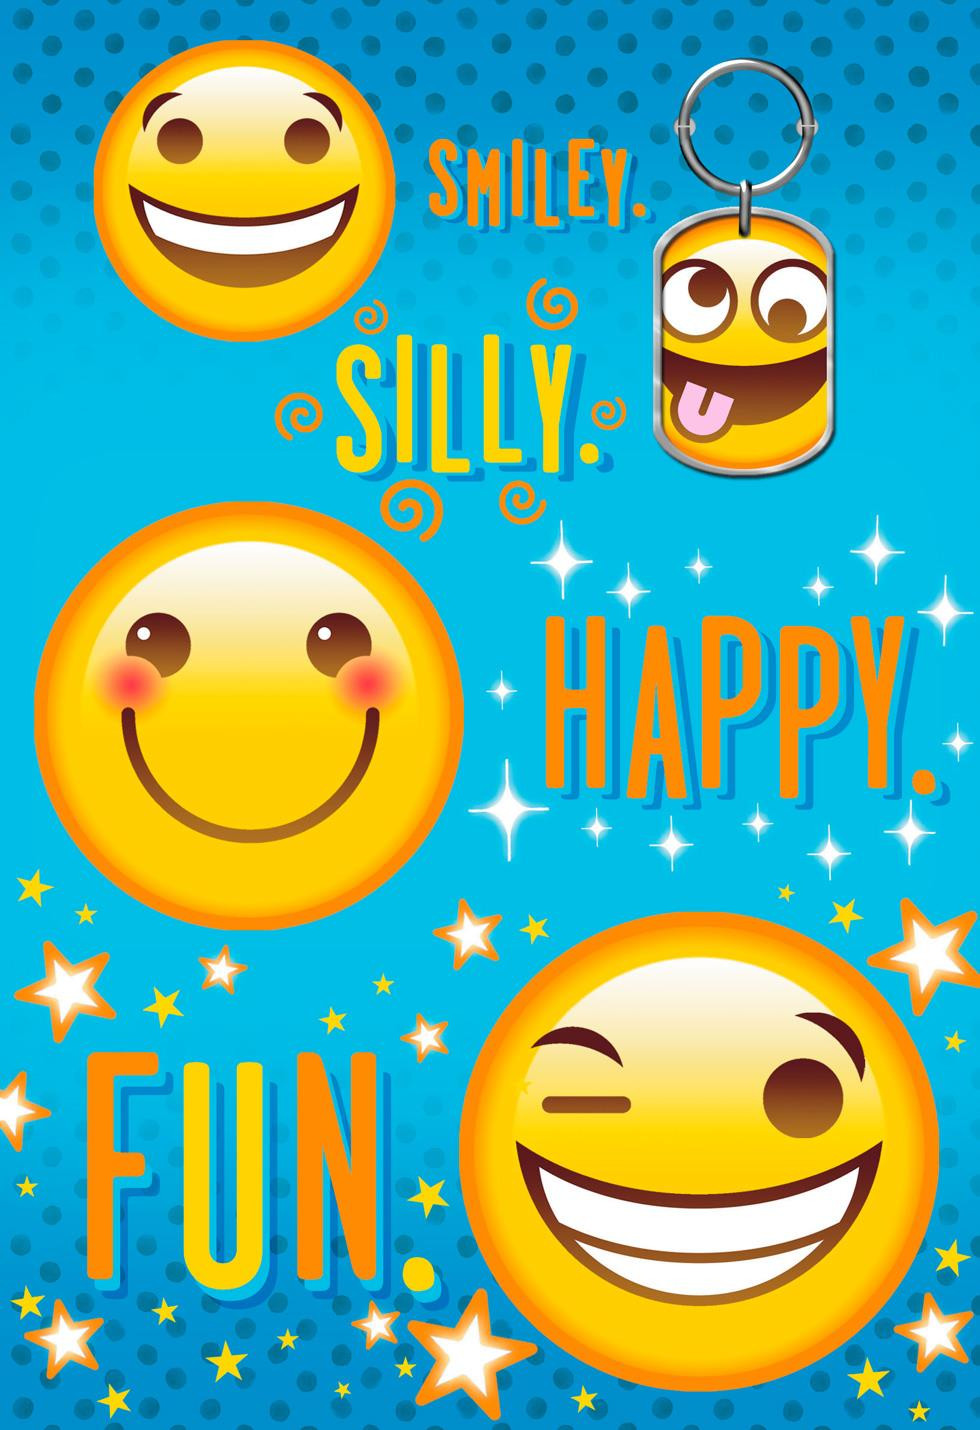 Best ideas about Emoji Birthday Card
. Save or Pin Emoji Keychain Birthday Card End of Life Hallmark Now.